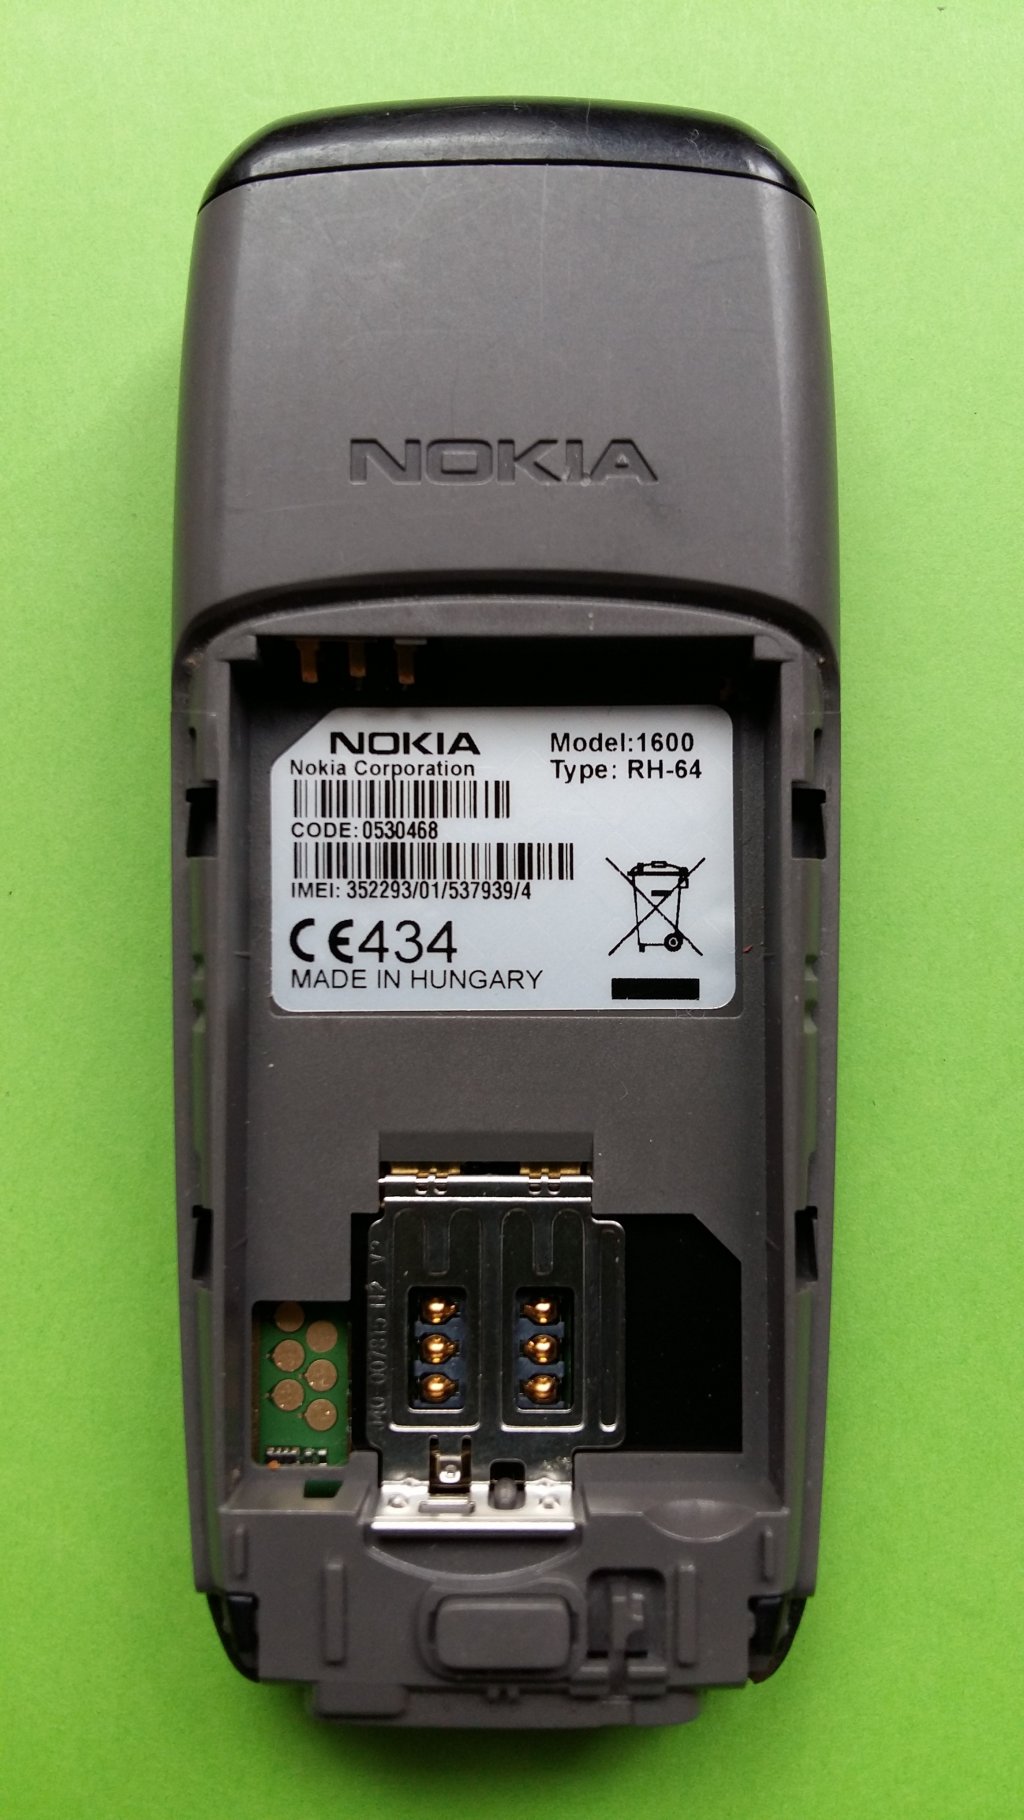 image-9904199-Nokia_1600_(11)3-45c48.w640.jpg